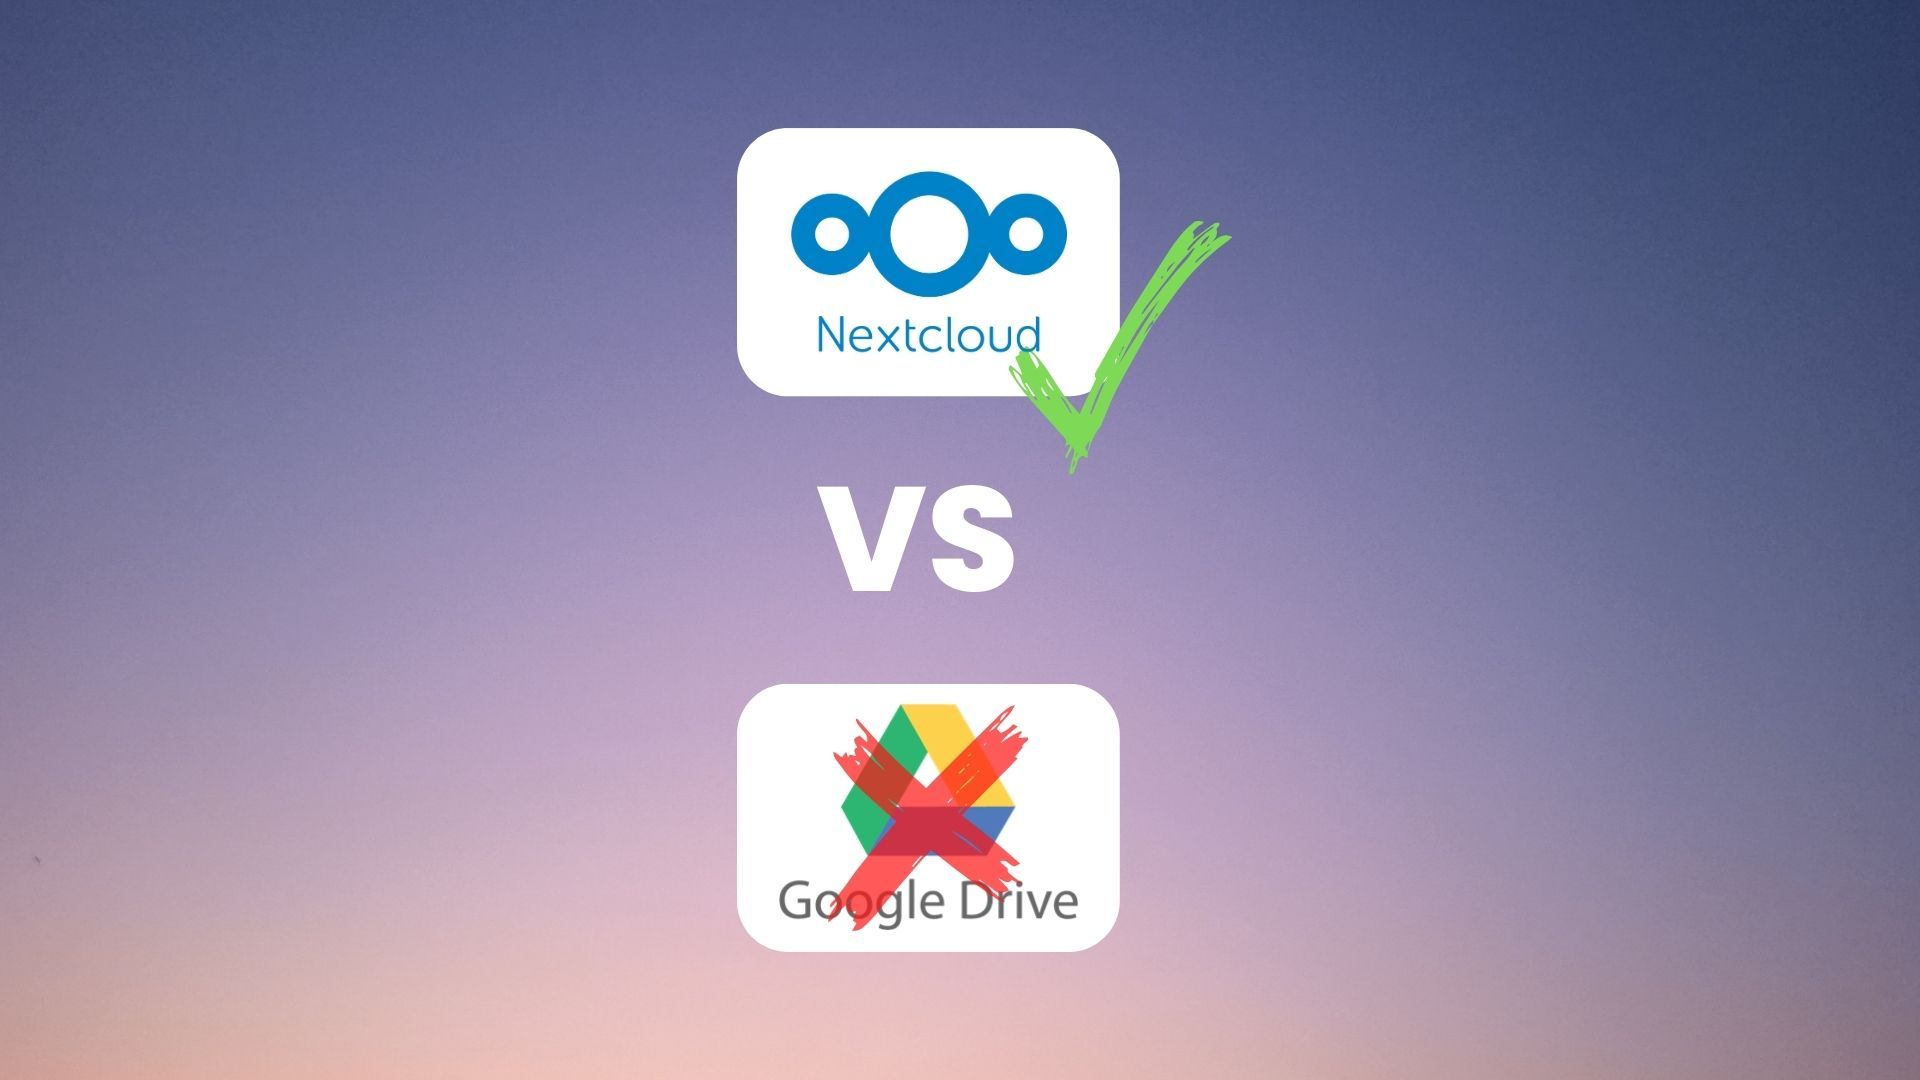 NextCloud: The Free Open-Source Alternative to Google Drive